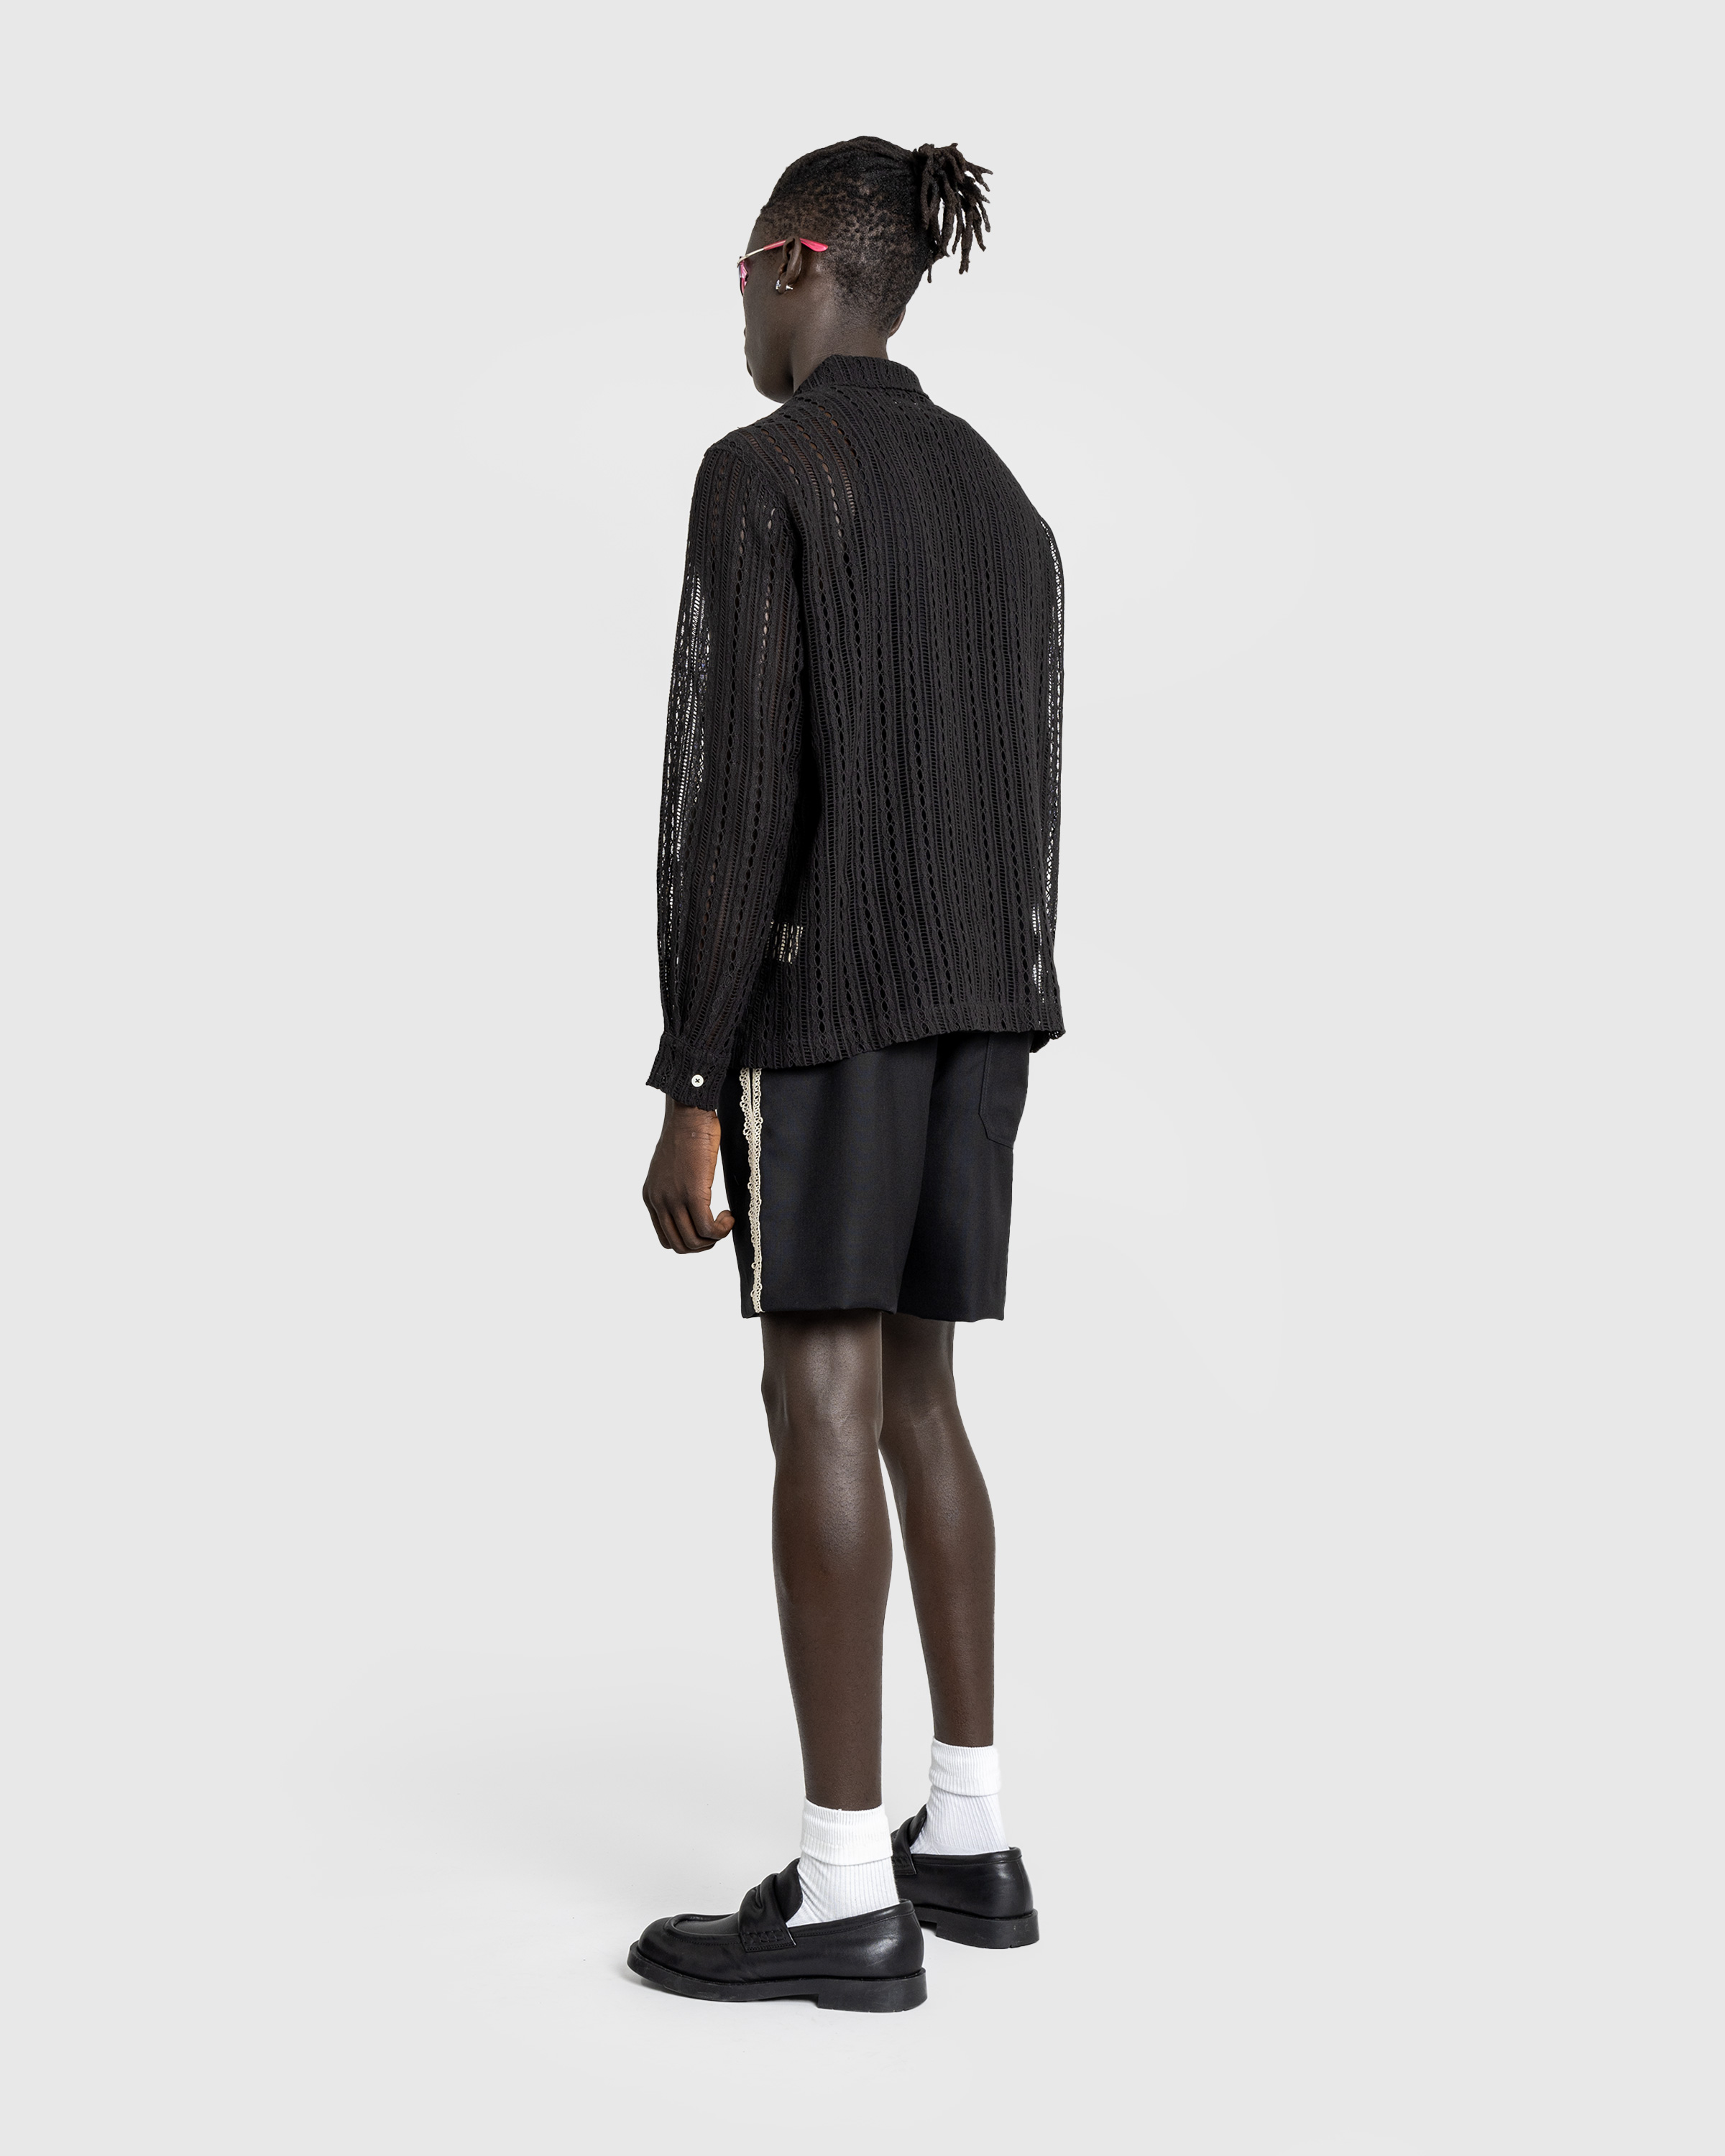 Bode – Meandering Lace Long-Sleeve Shirt Black - Longsleeve Shirts - Black - Image 4